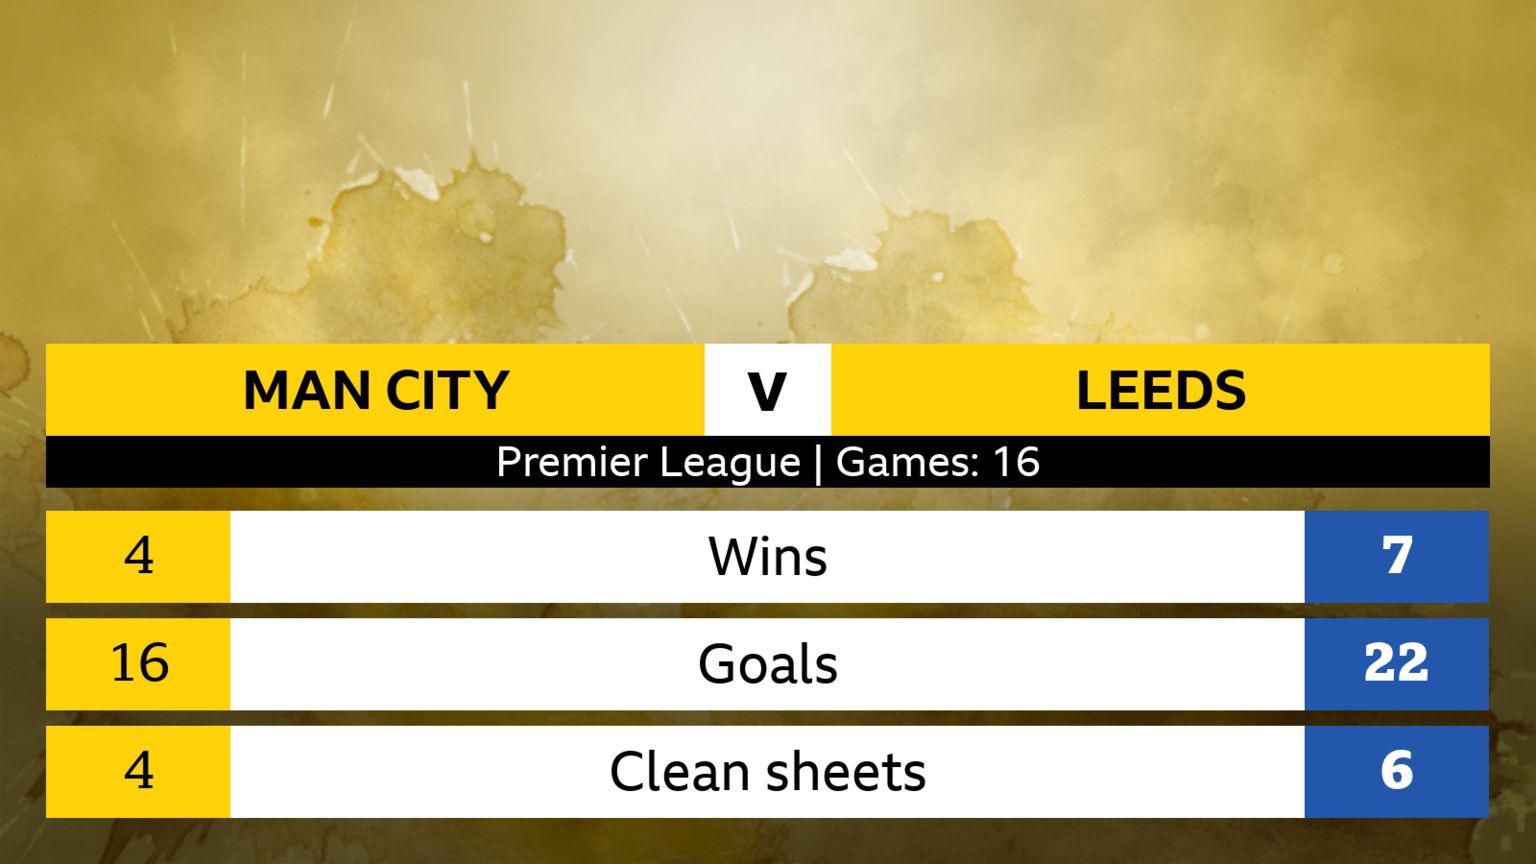 Manchester City v Leeds 16 games. Man City - 4 Wins, 16 goals, 4 clean sheets. Leeds - 7 wins, 22 goals, 6 clean sheets